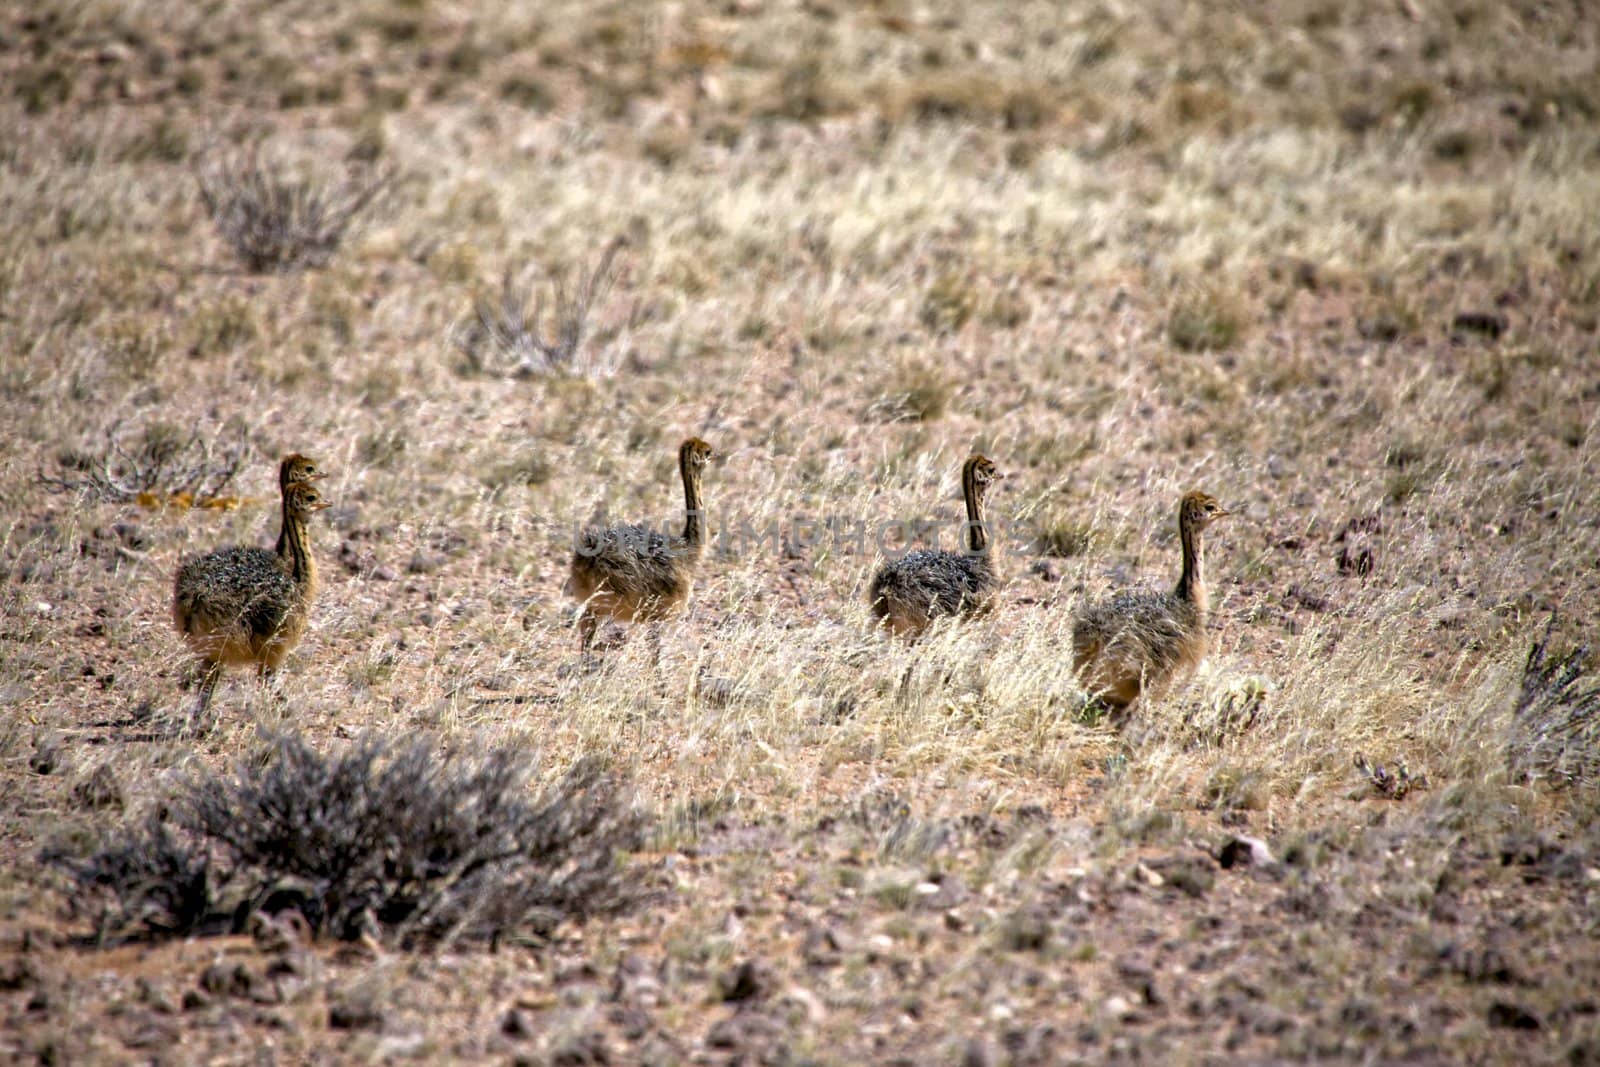 ostrich cub near luderitz sperrgebiet national park namibia africa